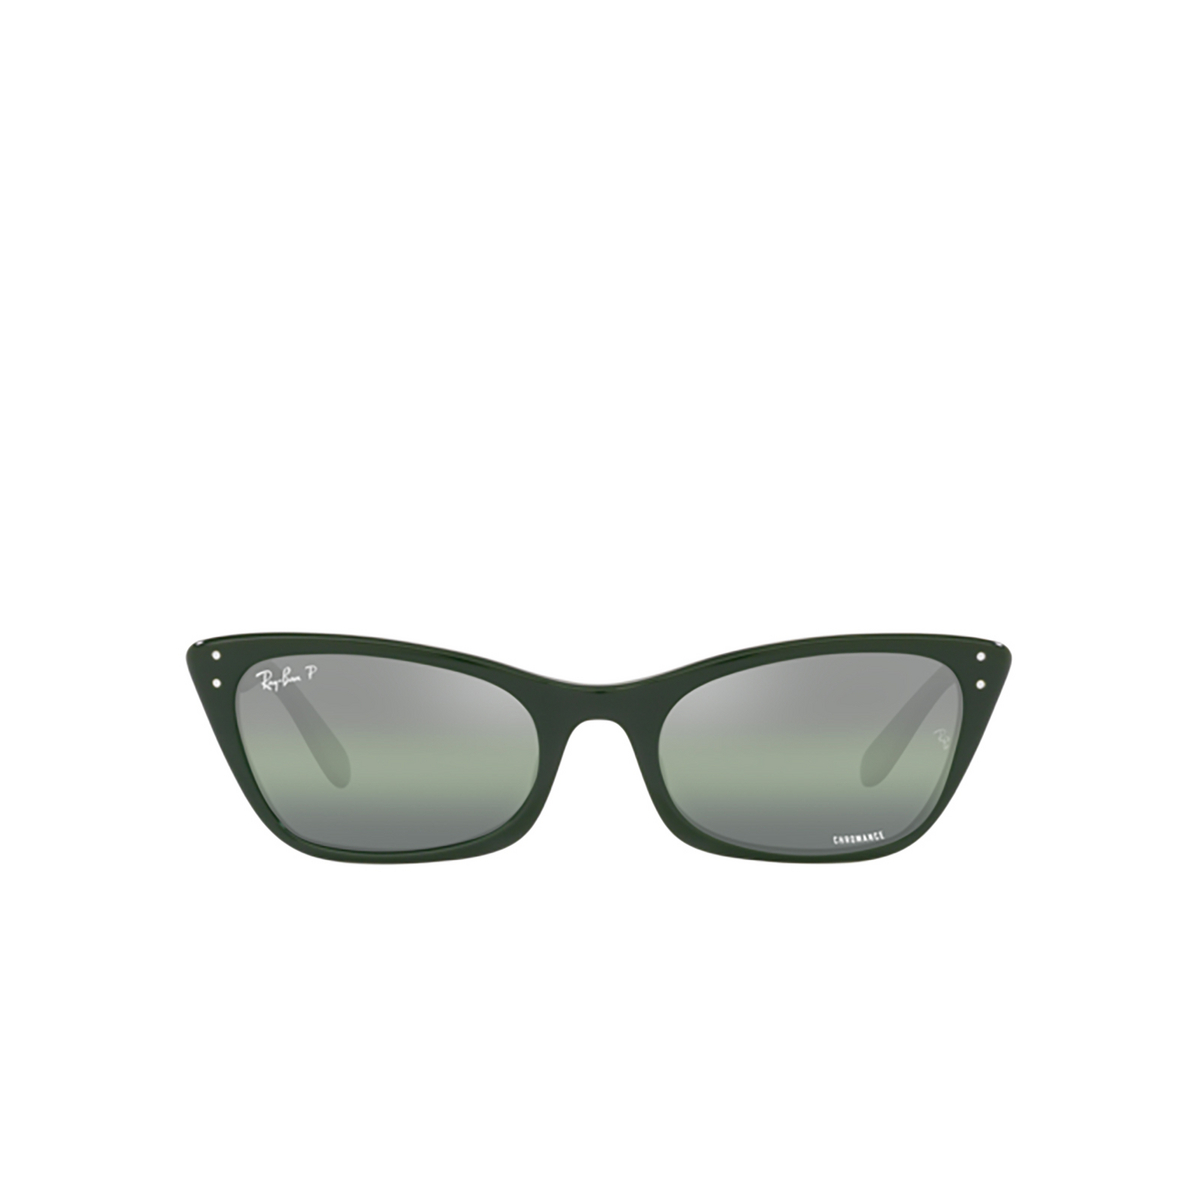 Ray-Ban LADY BURBANK Sunglasses 6659G4 Green - front view